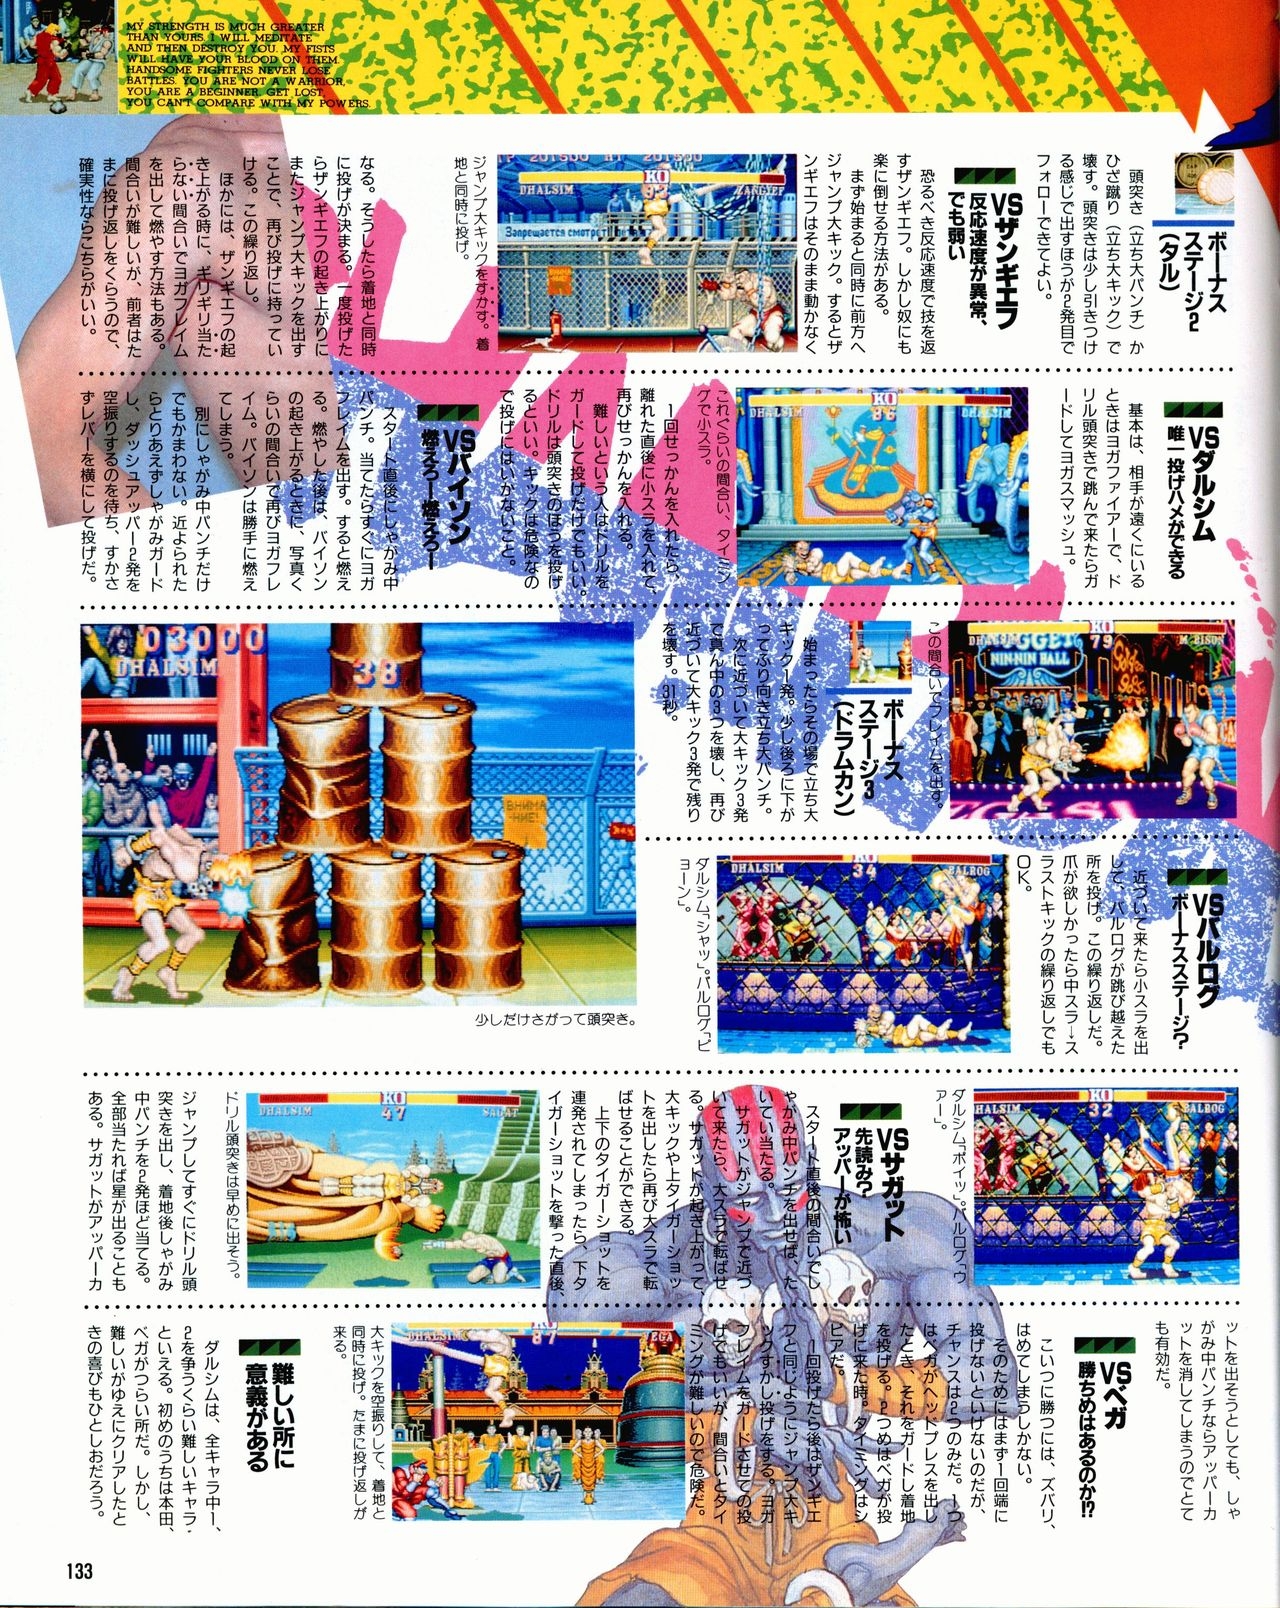 Street Fighter II Dash - Gamest special issue 77 134